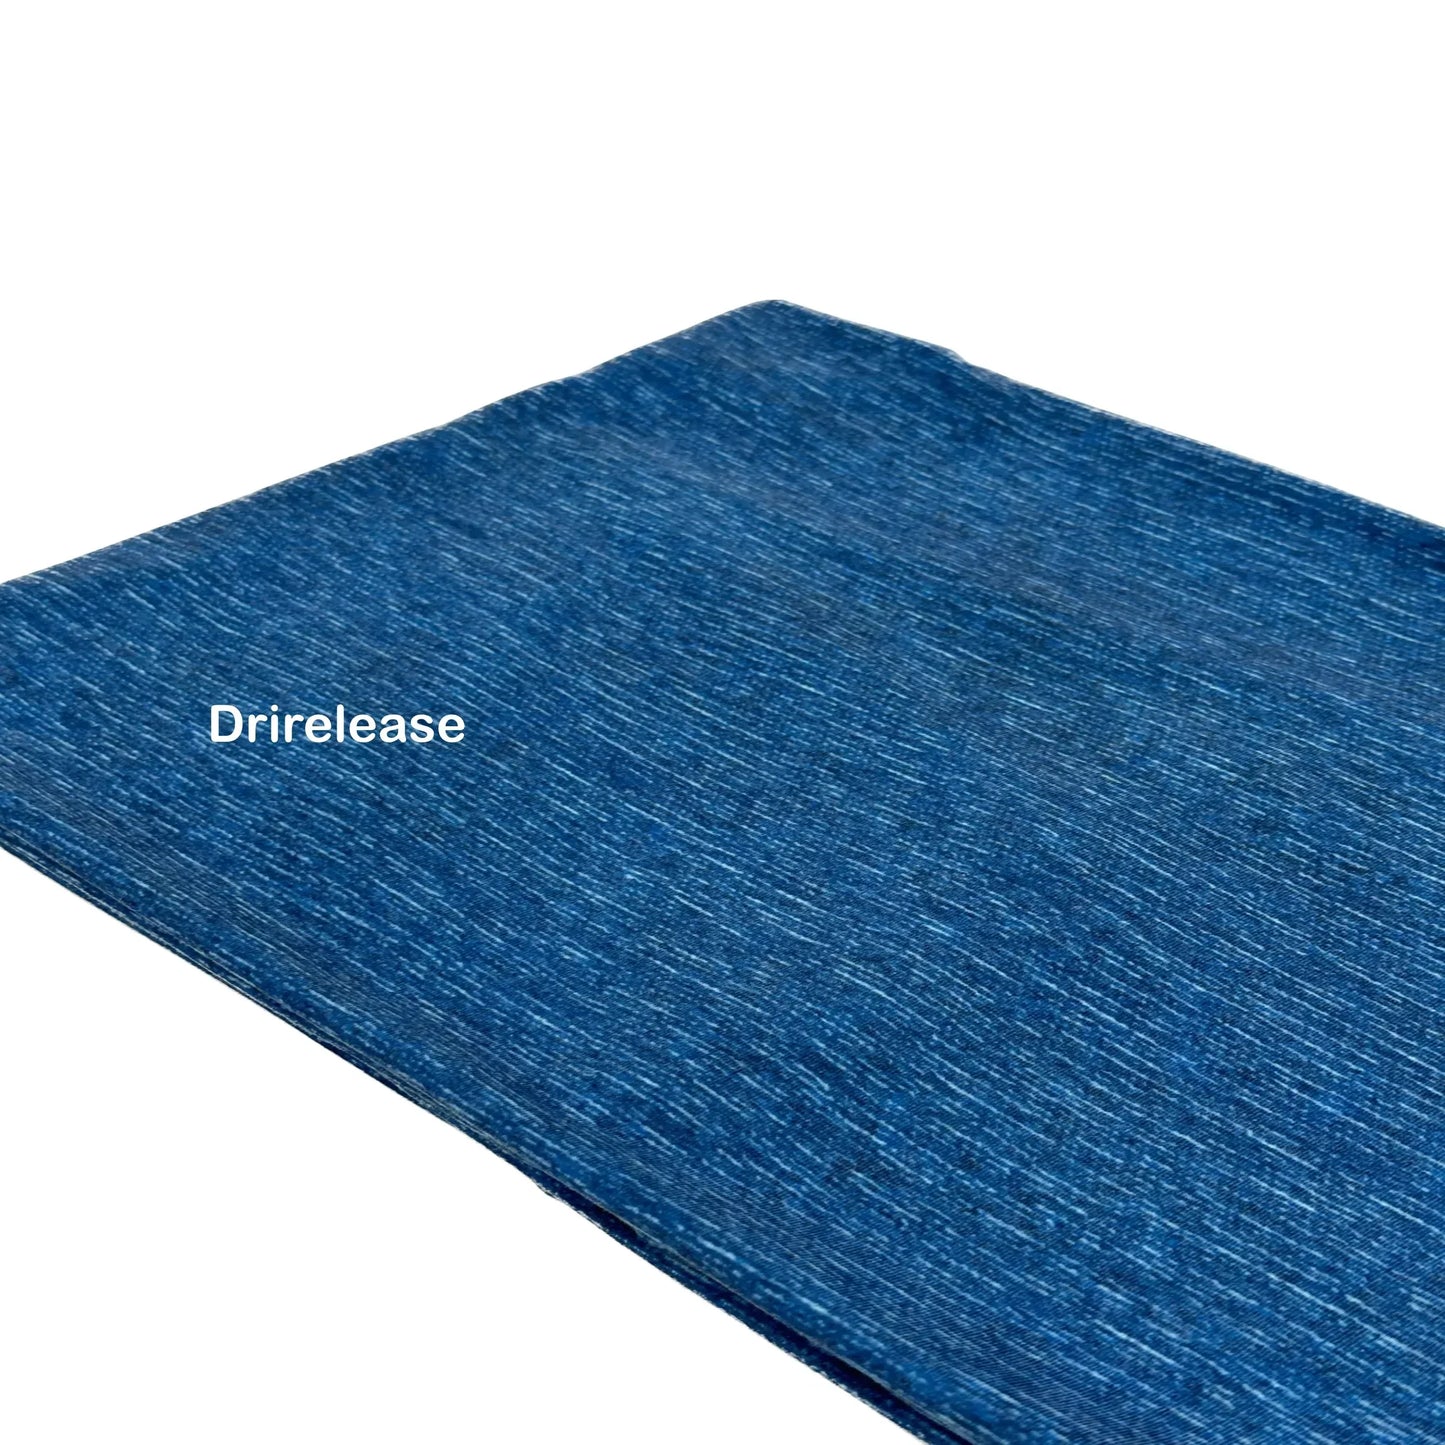 Drirelease: Dark Cyan Printed Woven Texture